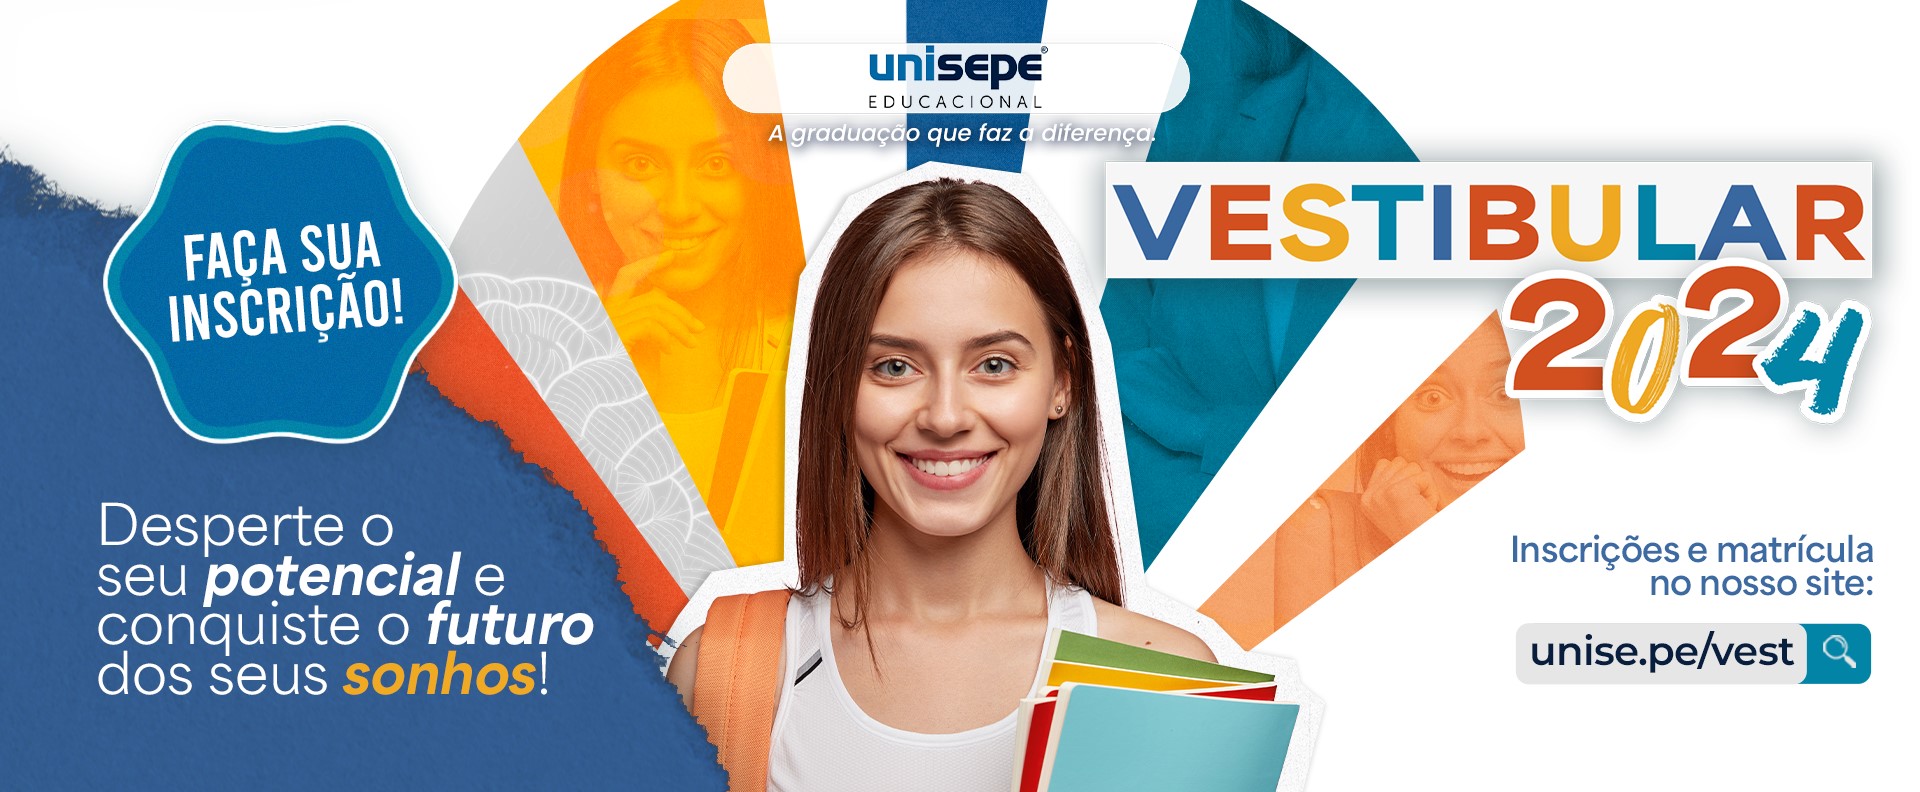 GRUPO UNISEPE EDUCACIONAL VESTIBULAR 2024 - Graduação digital | UNISEPE